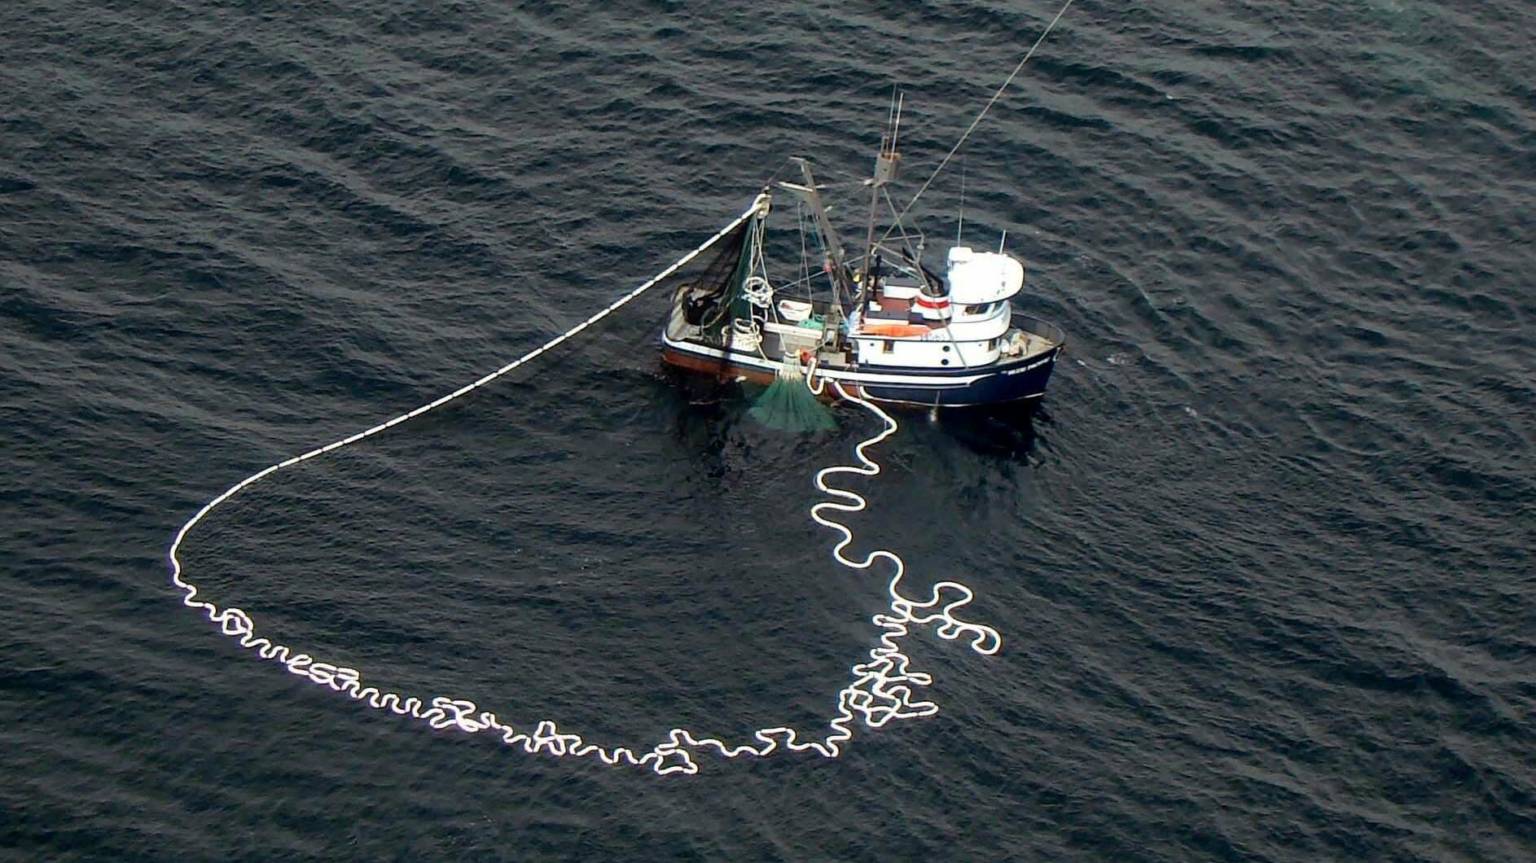 Lunar Bow: purse-seining for mackerel | Fishing News